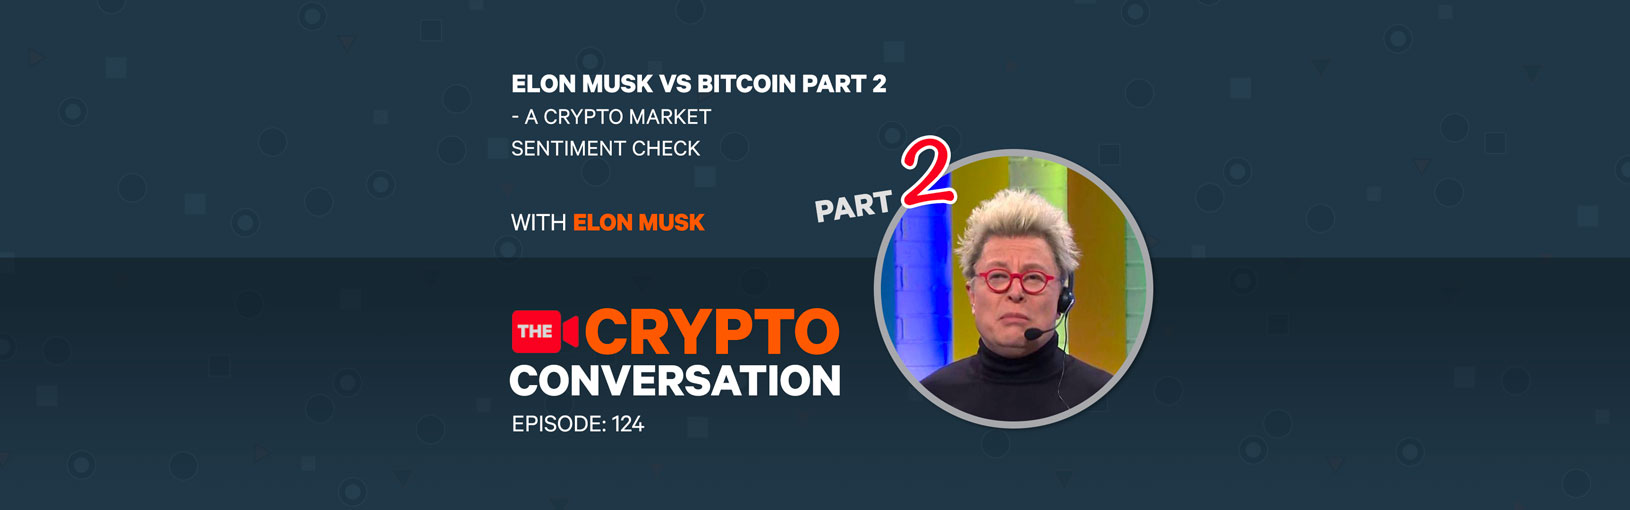 Elon Musk Vs Bitcoin part 2 – The Crypto market sentiment check